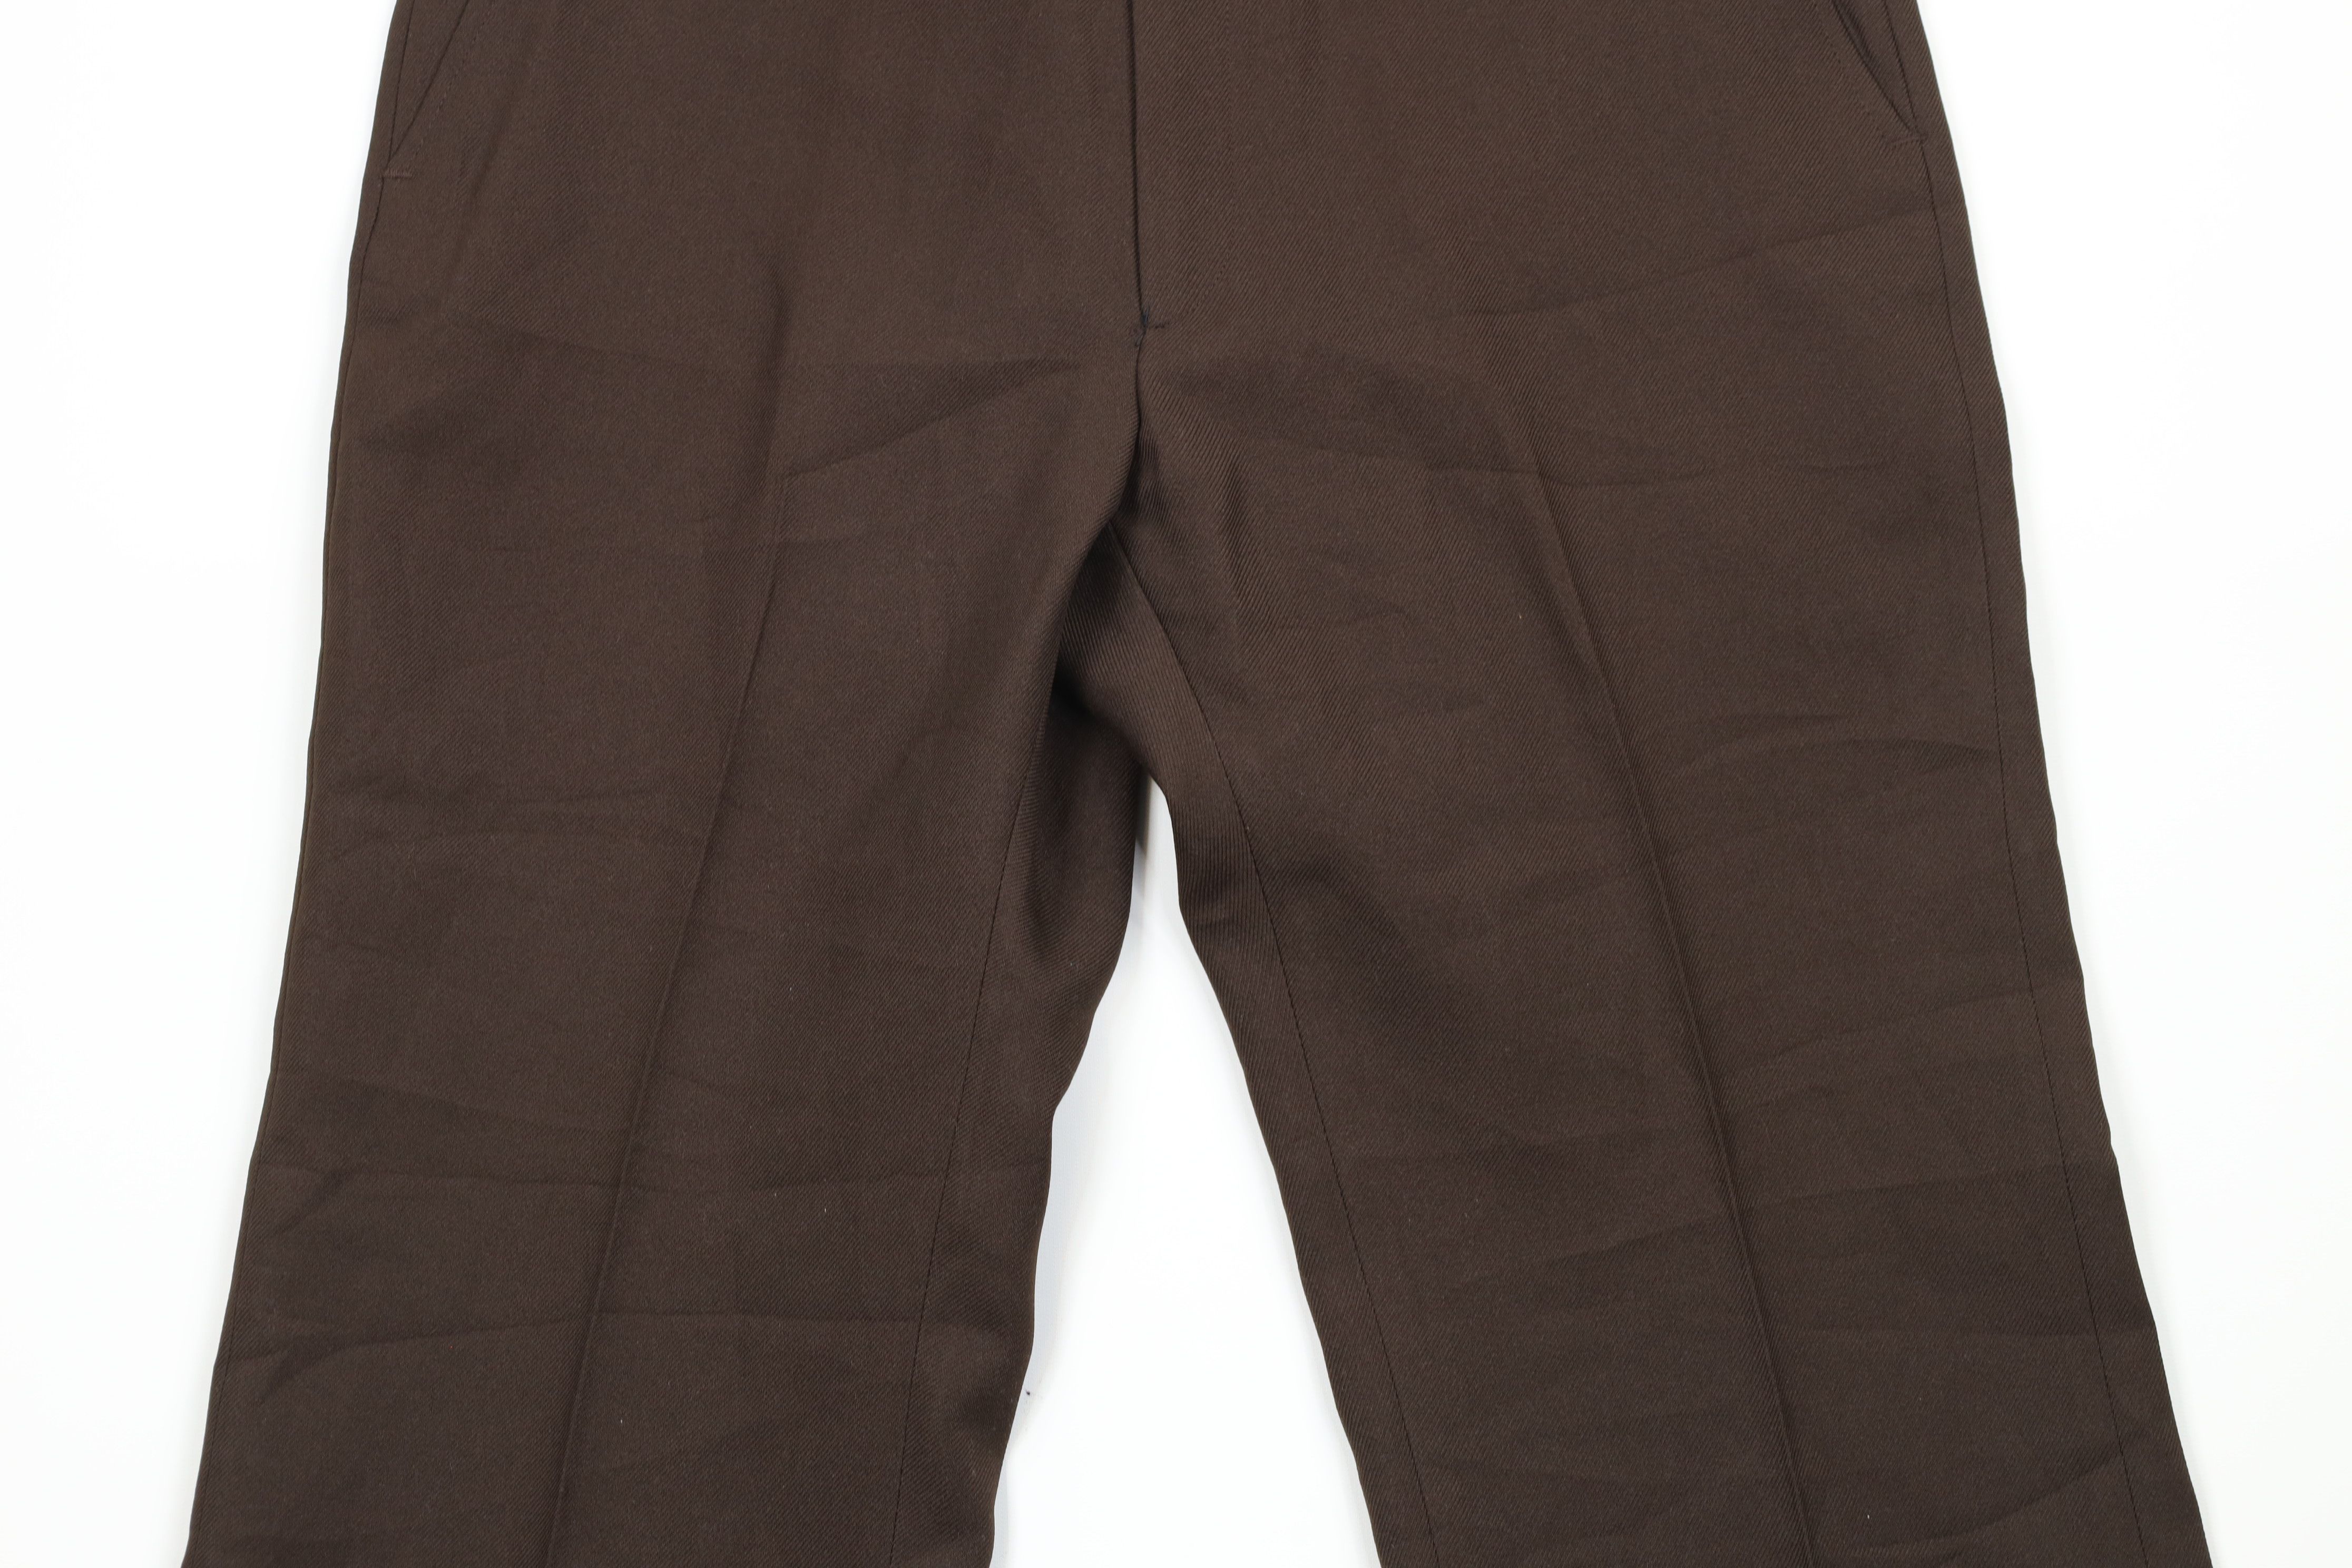 Vintage Vintage 70s Streetwear Knit Flared Bell Bottoms Pants Brown Size US 32 / EU 48 - 3 Thumbnail